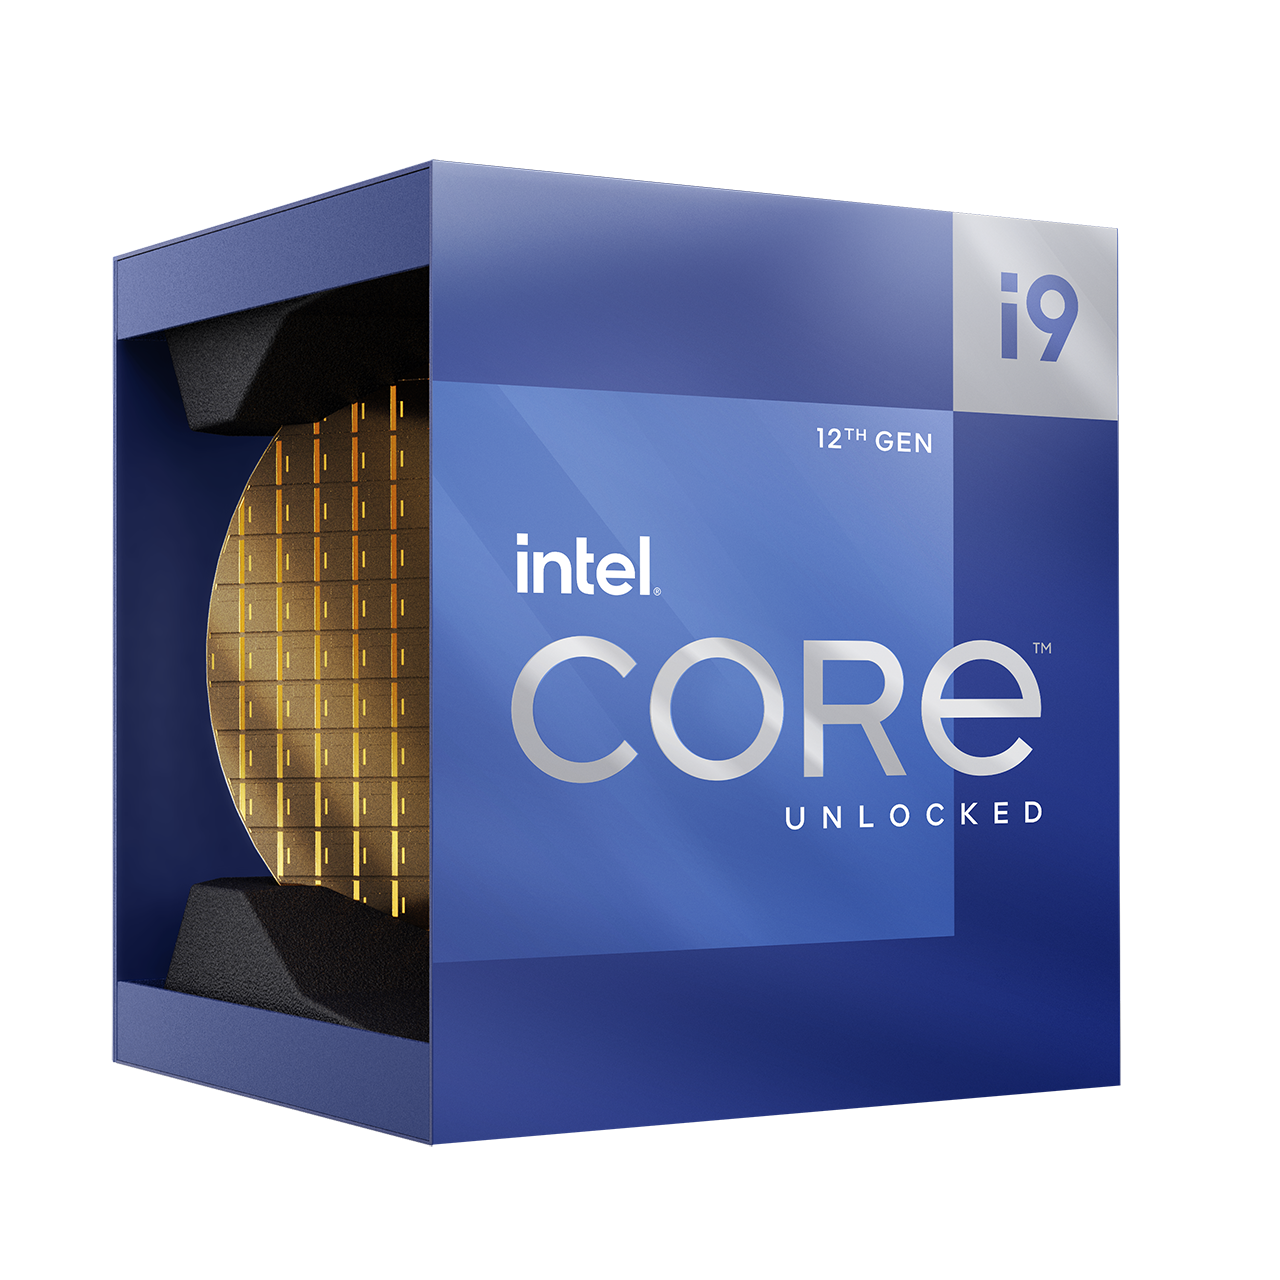 Intel Core i9 12gen